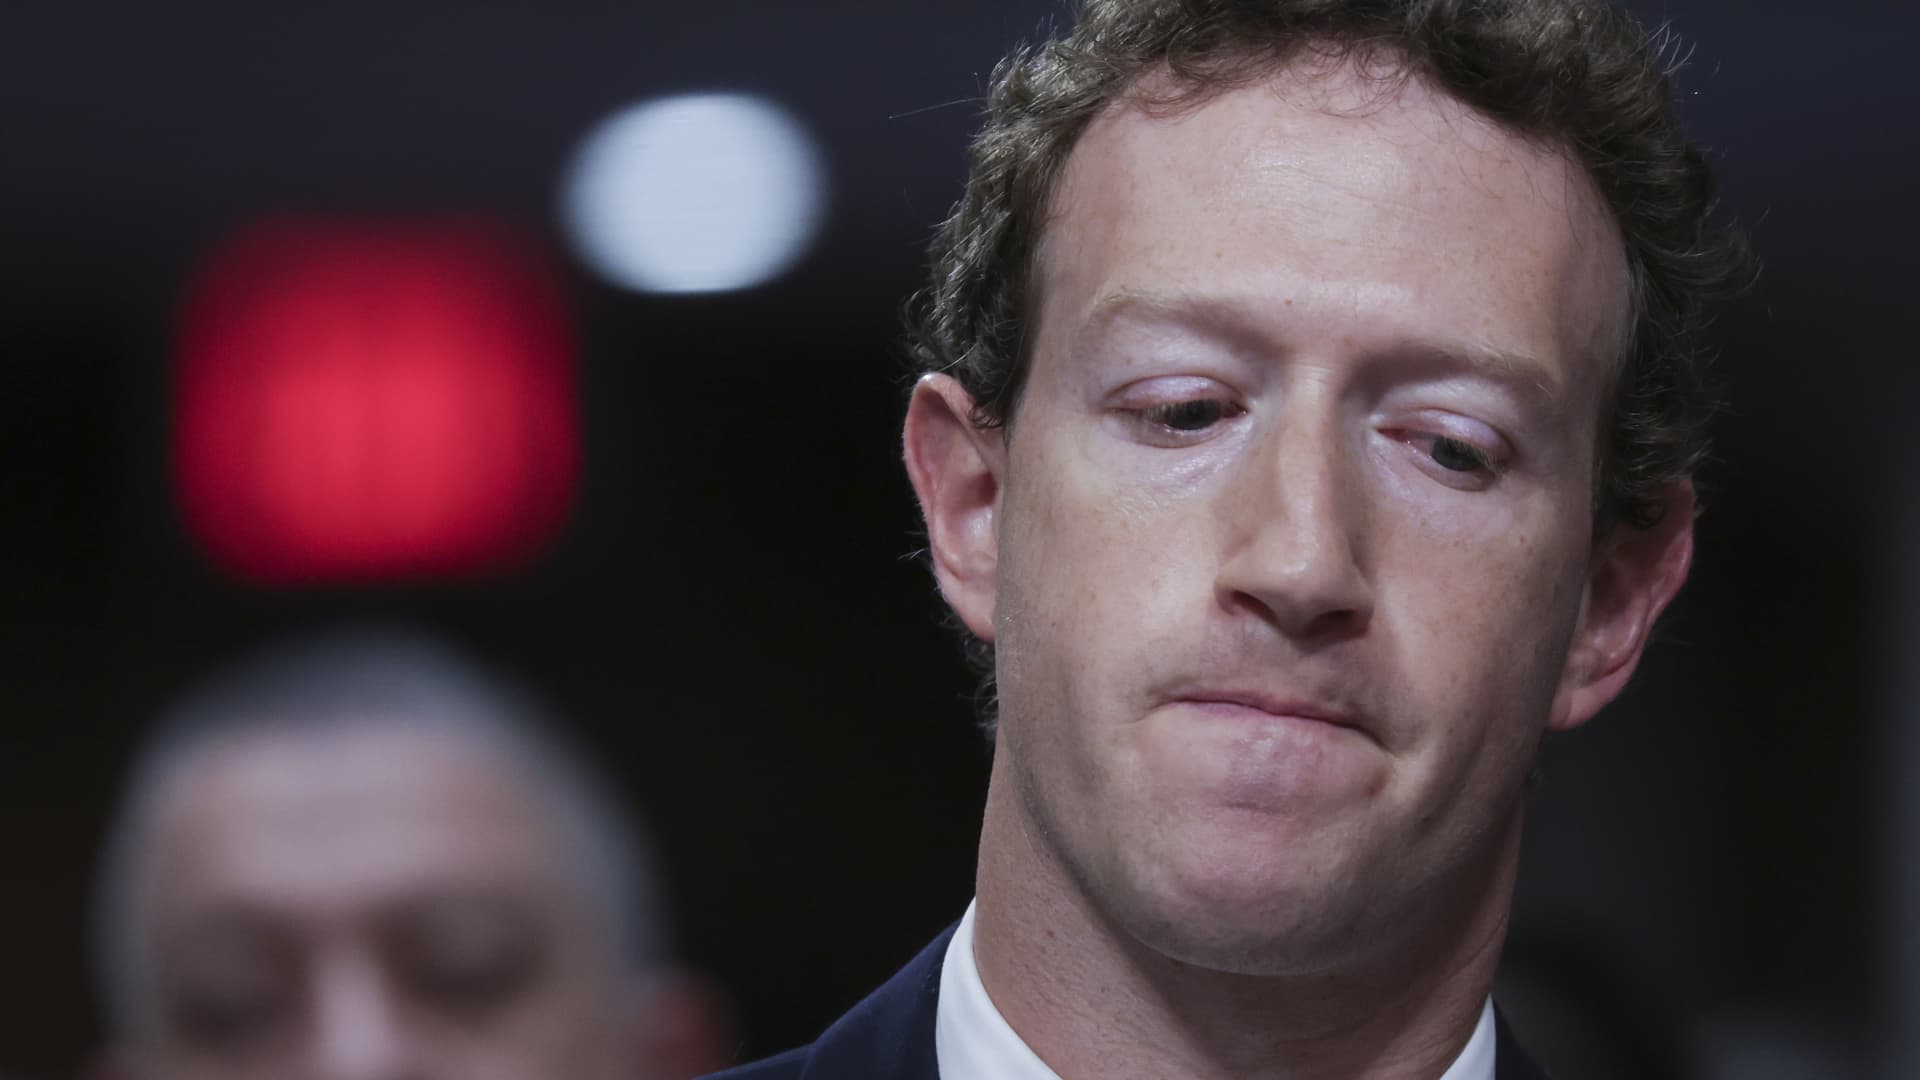 Meta loses $200 billion in value, Zuckerberg focuses on AI, metaverse